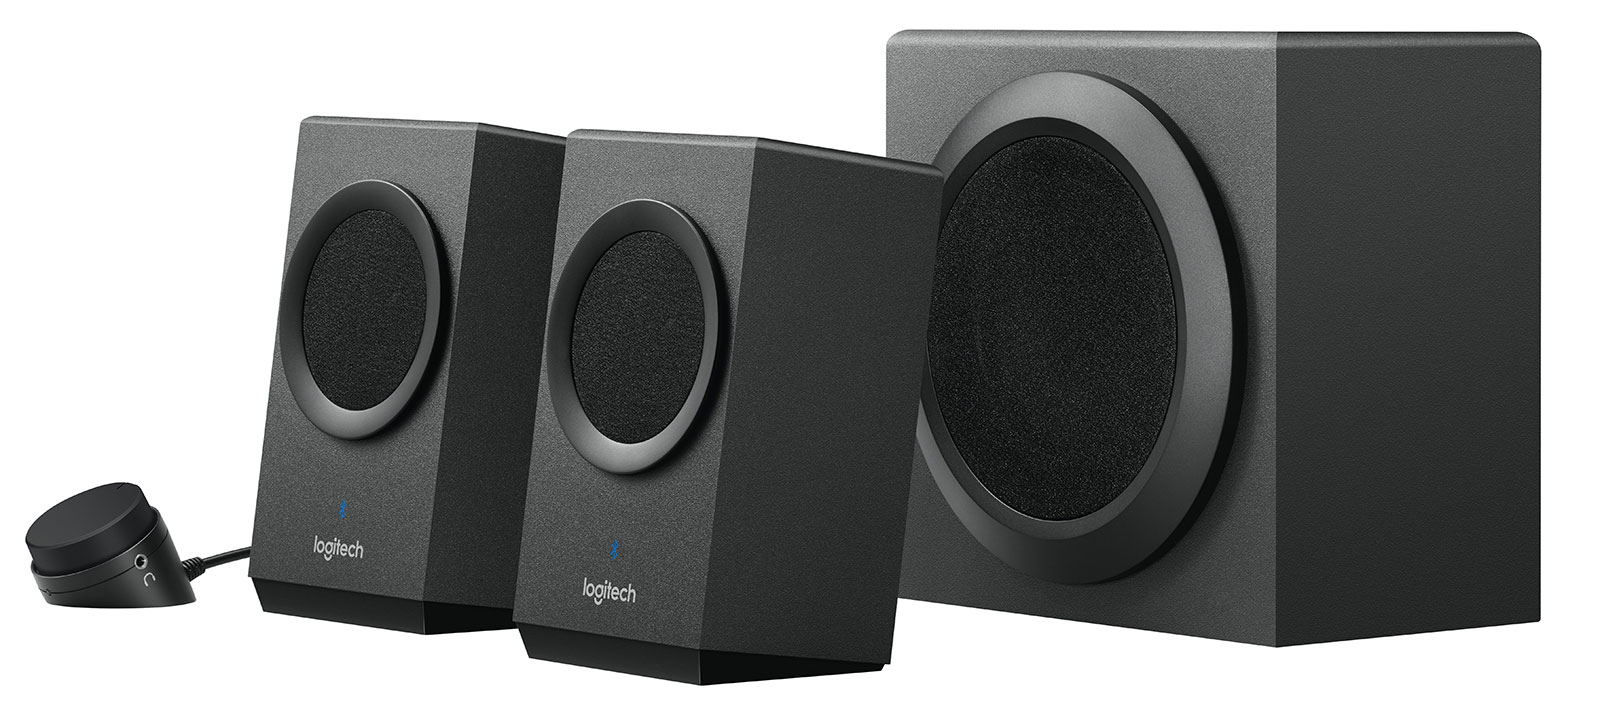 Logitech adds Bluetooth to desktop speakers – Pickr